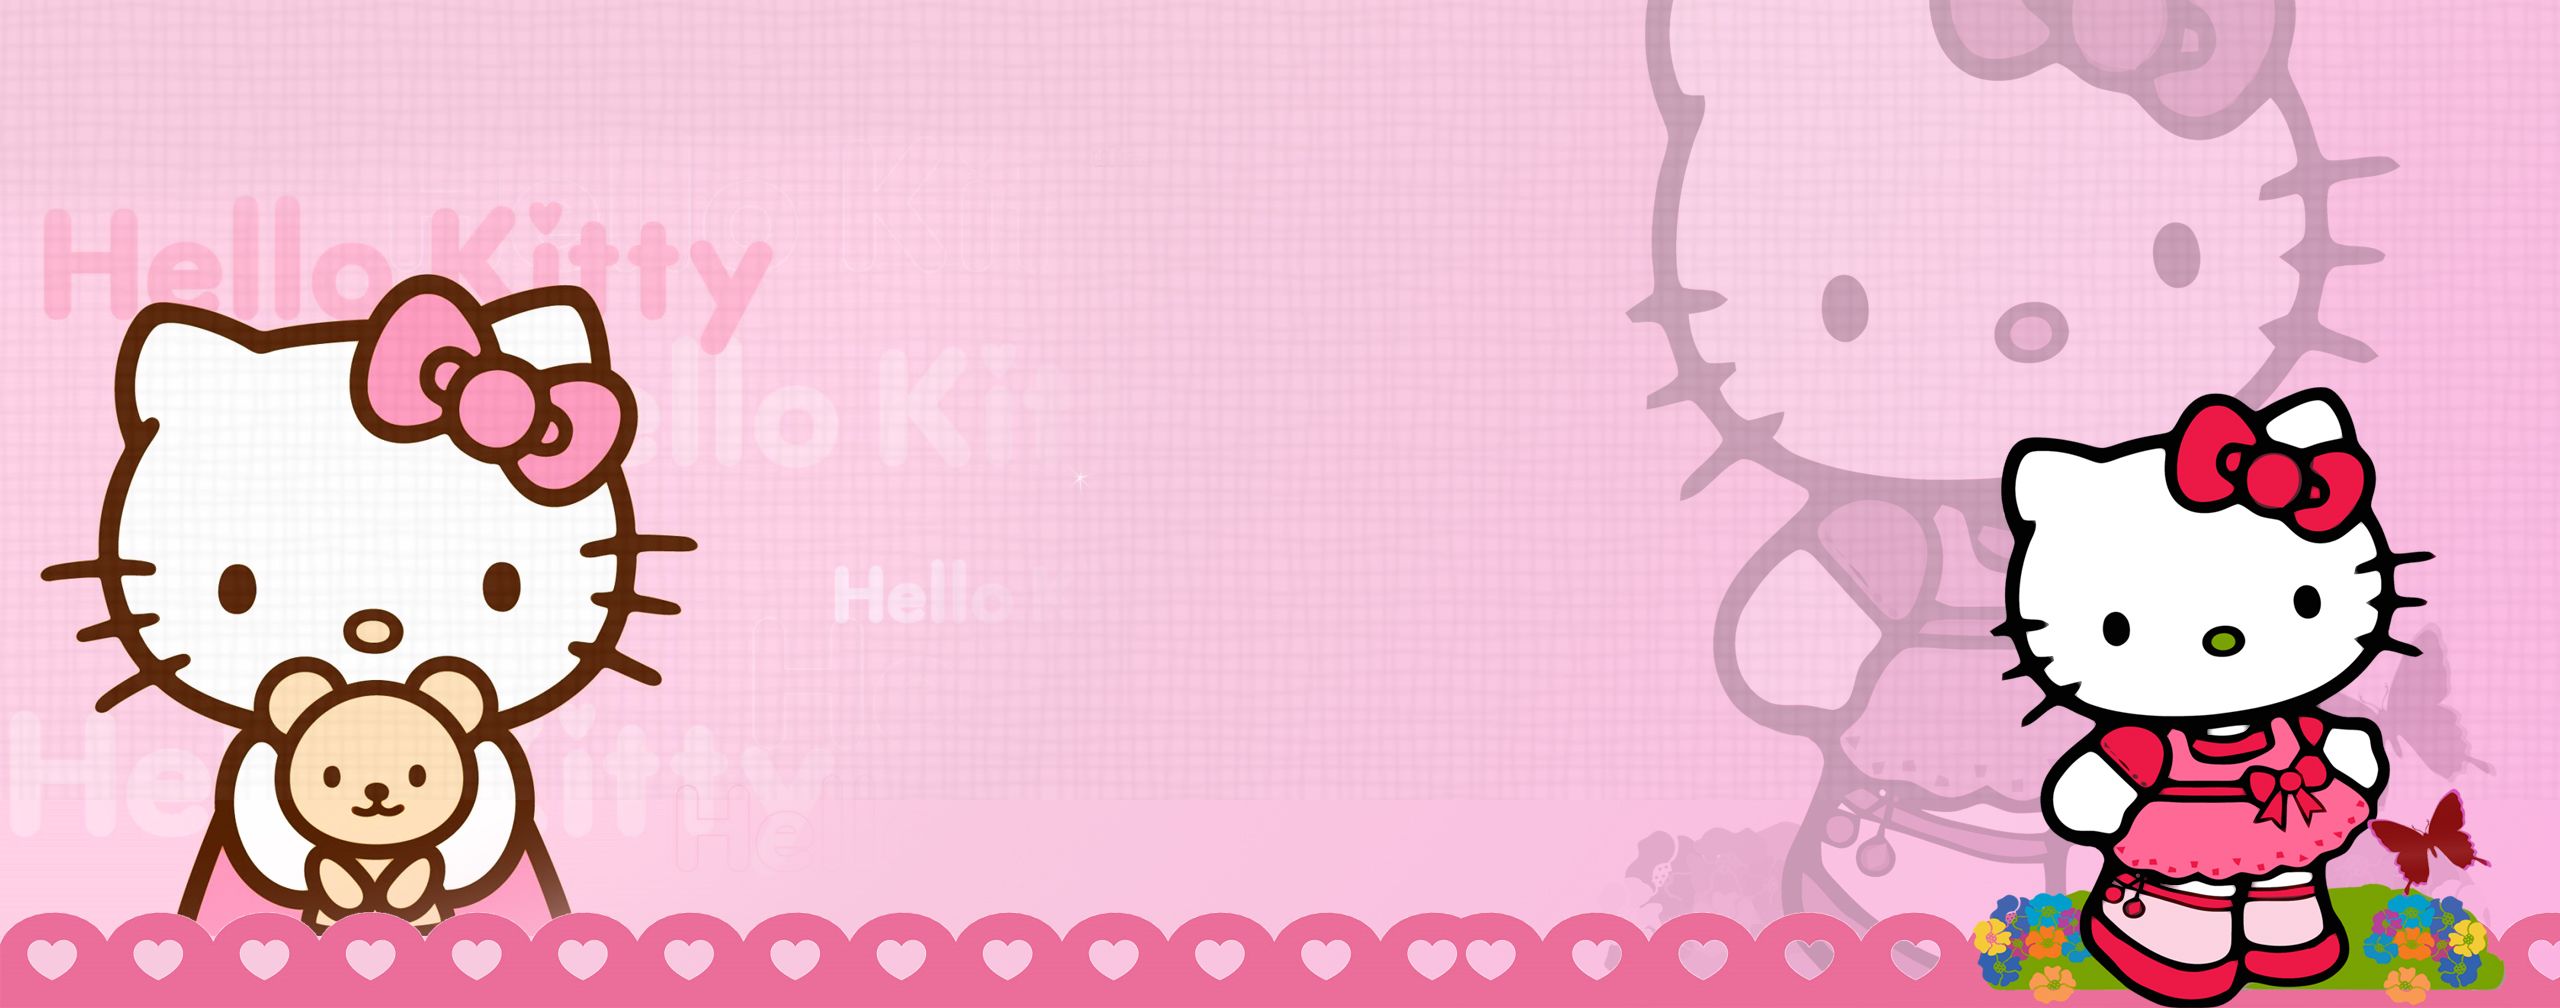 Download Hello Kitty Dual Monitor Wallp Brh Deviantart Wallpaper